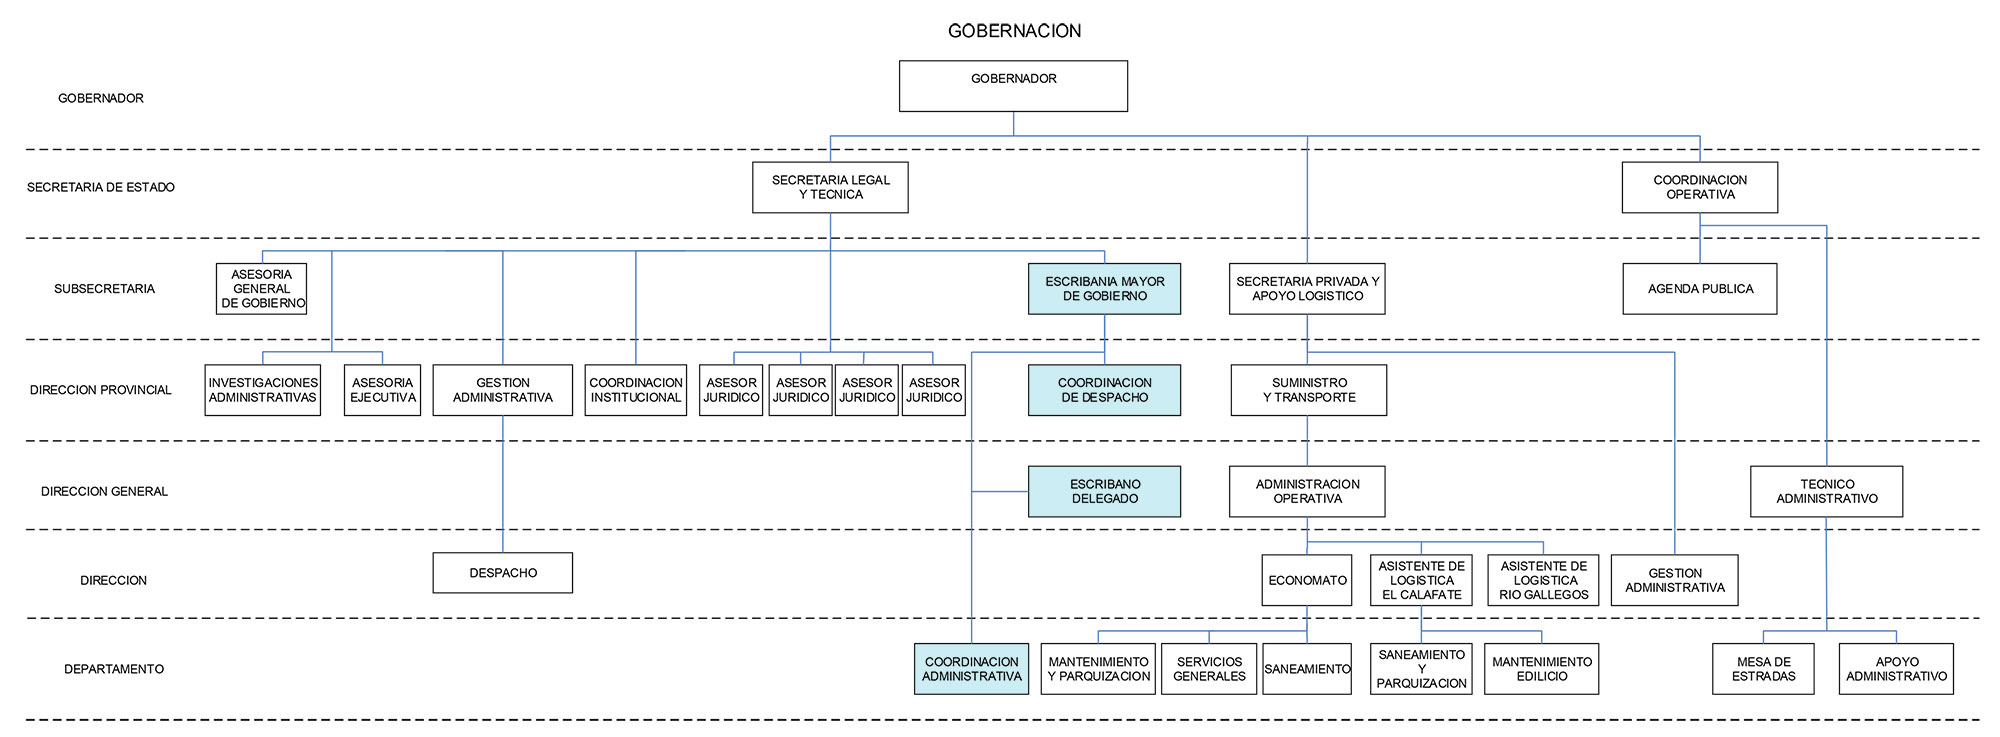 Estructura Organizativa de Gobernación